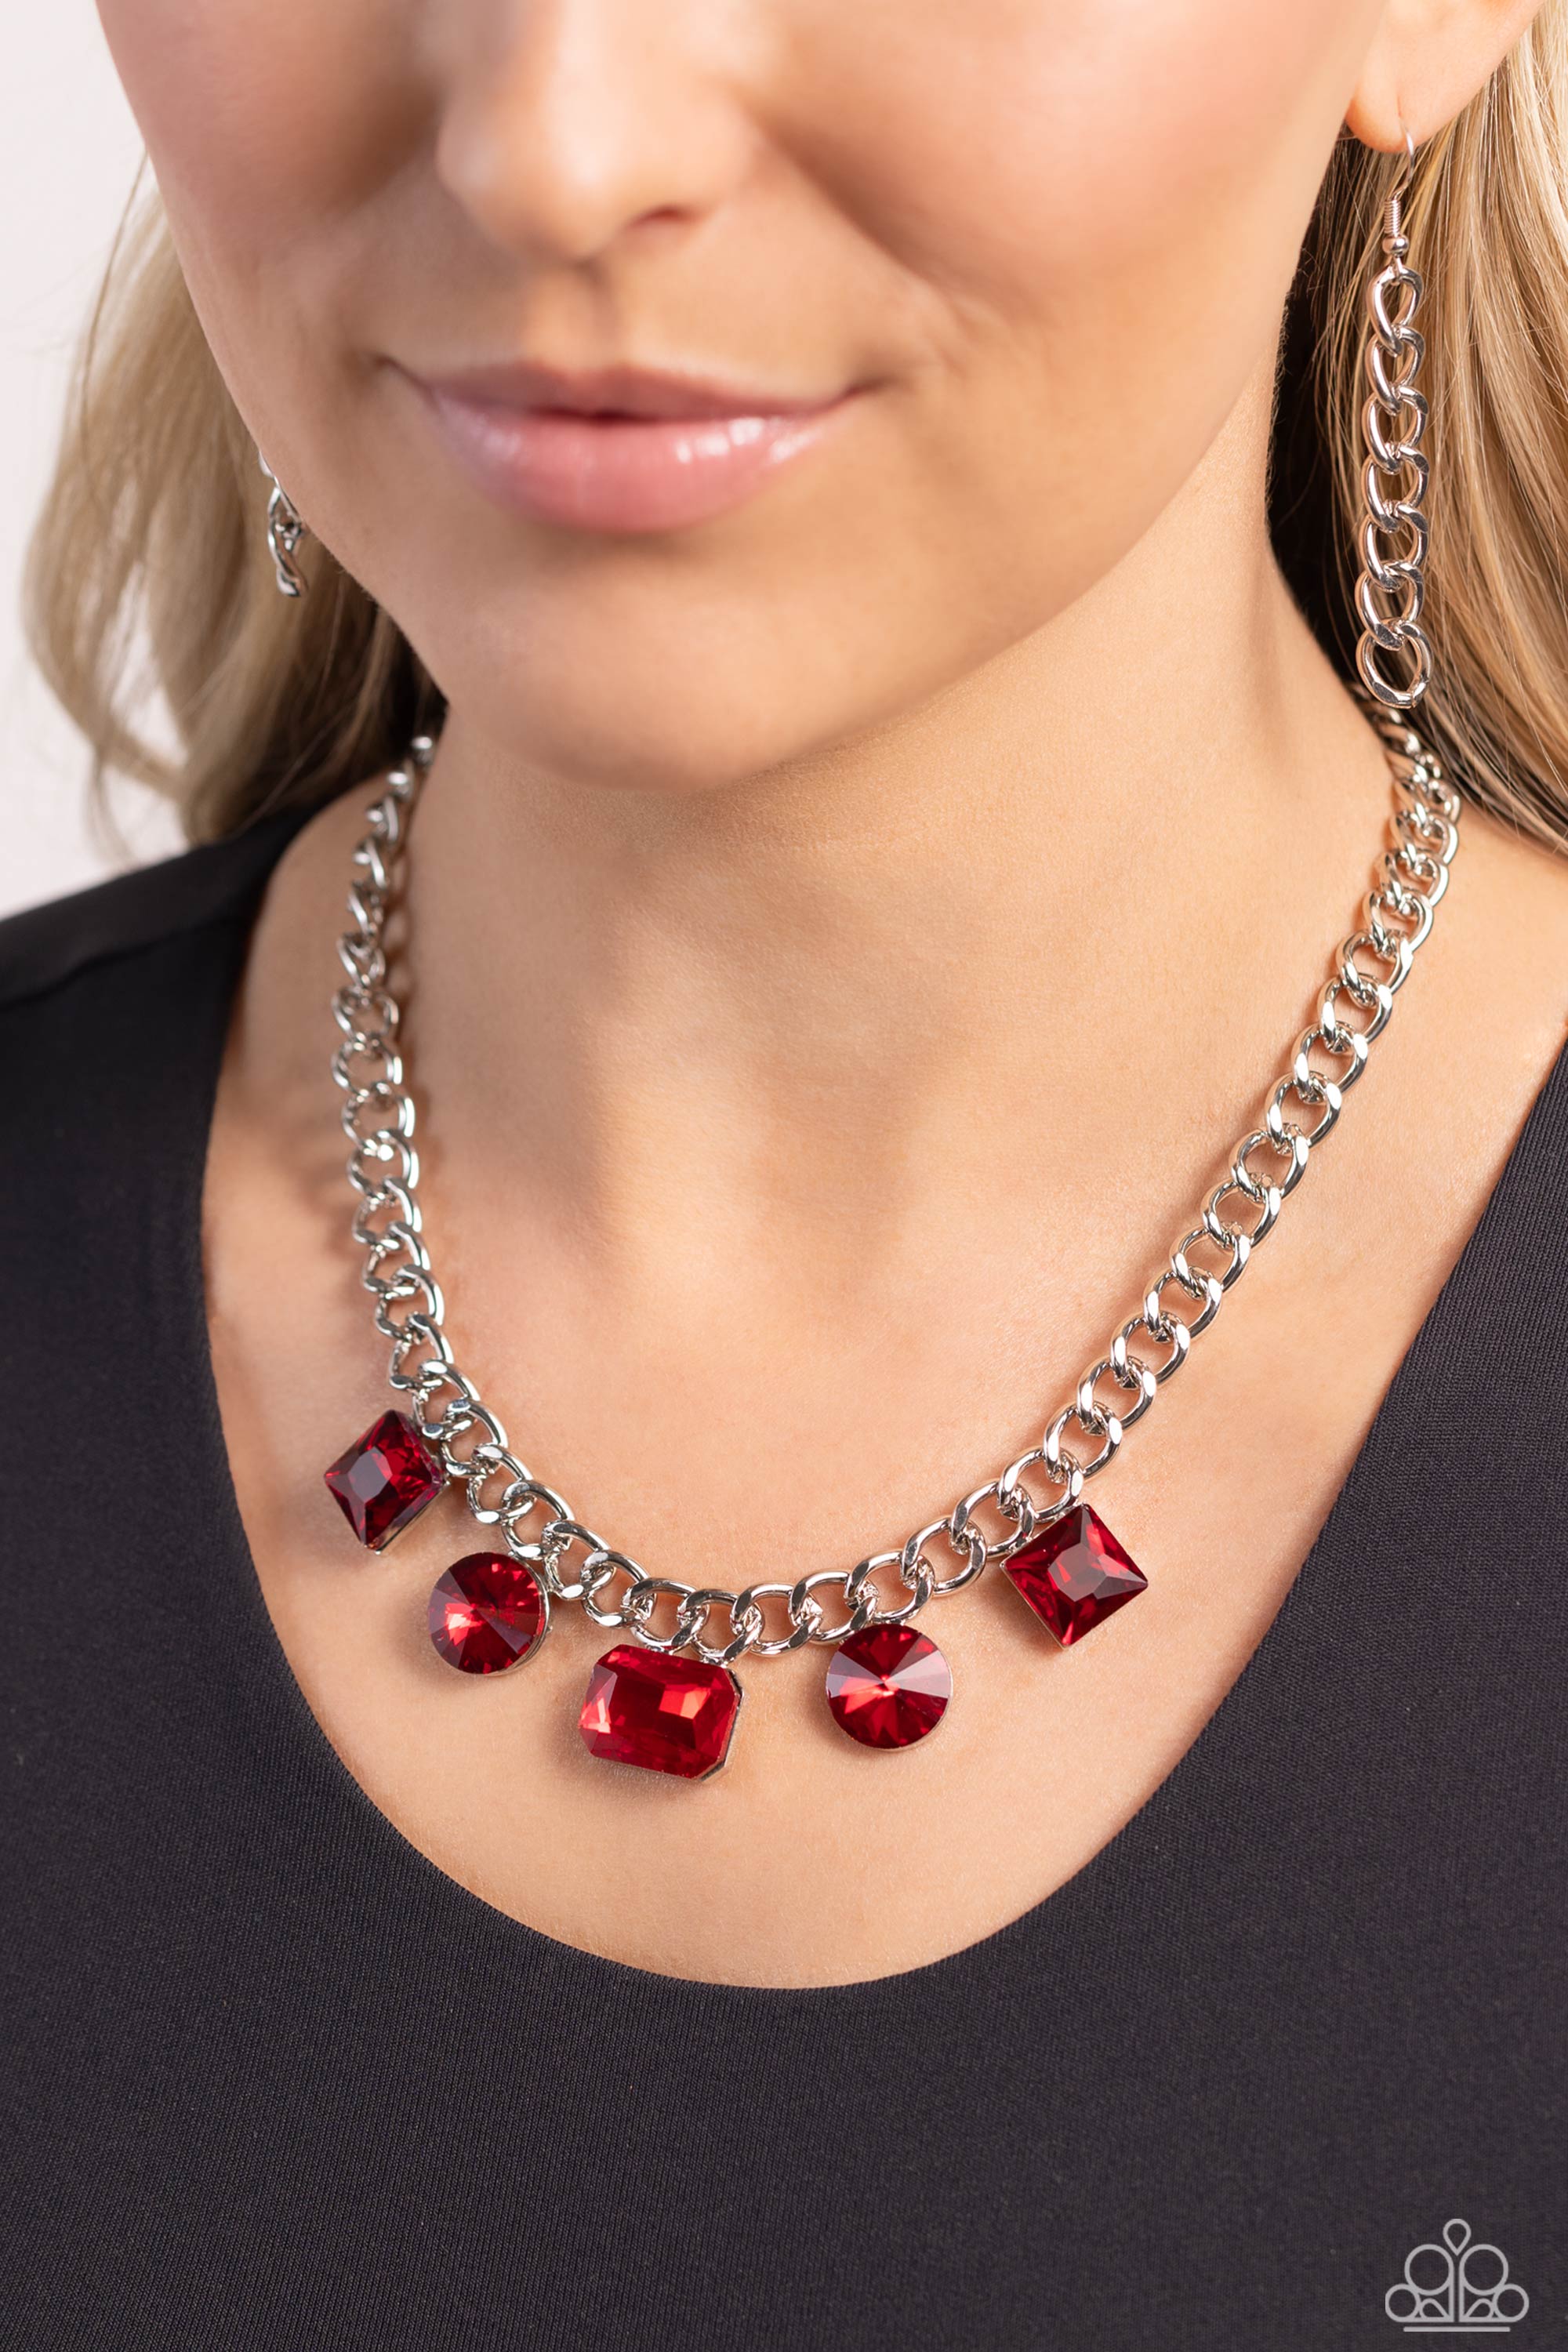 Alternating Audacity Red Rhinestone Necklace - Paparazzi Accessories- lightbox - CarasShop.com - $5 Jewelry by Cara Jewels